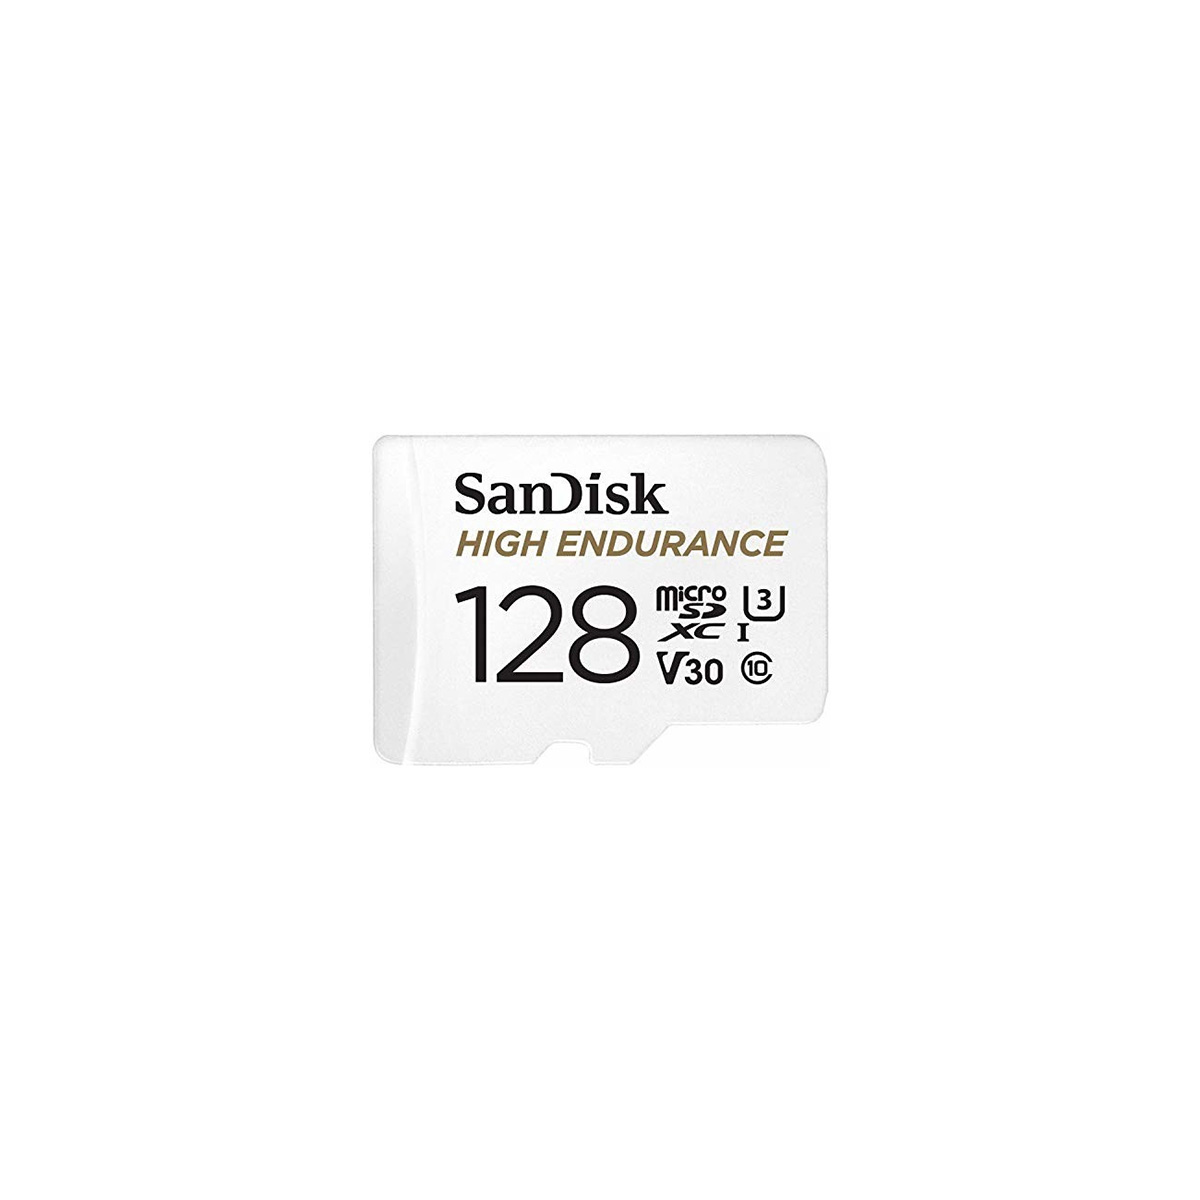 SanDisk High Endurance 128 GB microSDXC Karte mit SD-Adapter